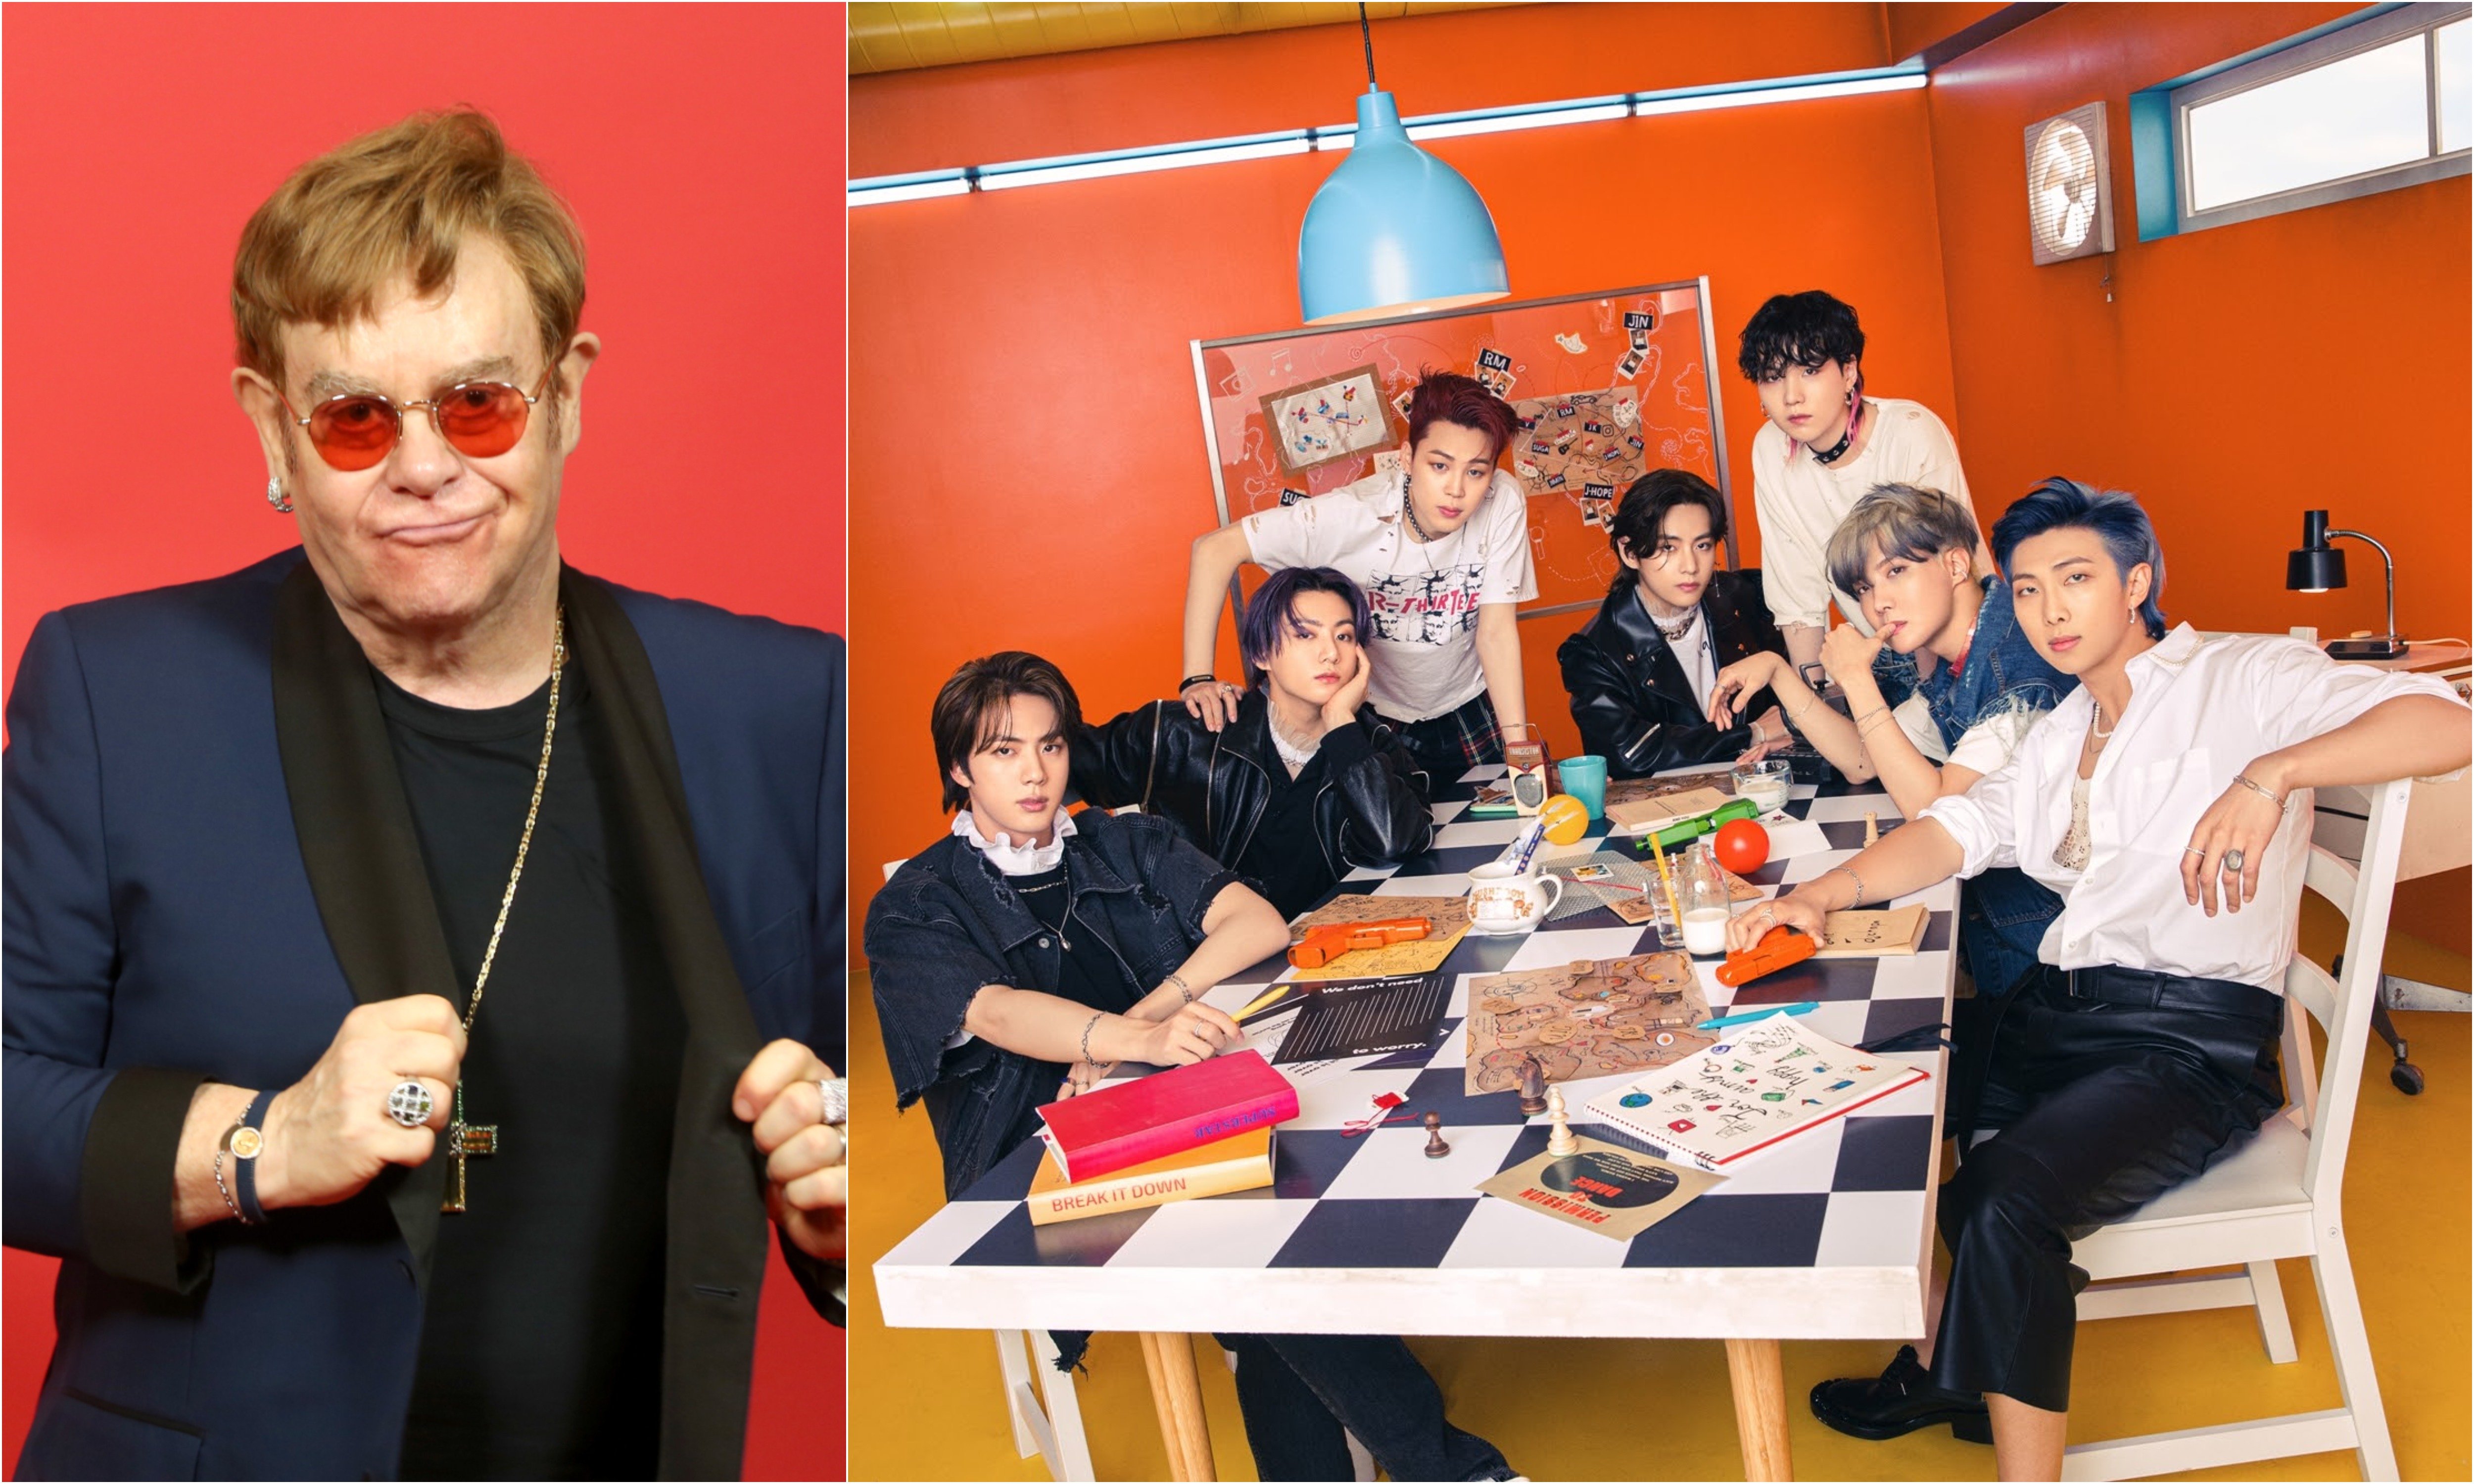 A joined photo of Elton John and Jin, Jungkook, Jimin, V, Suga, J-Hope, and RM of BTS